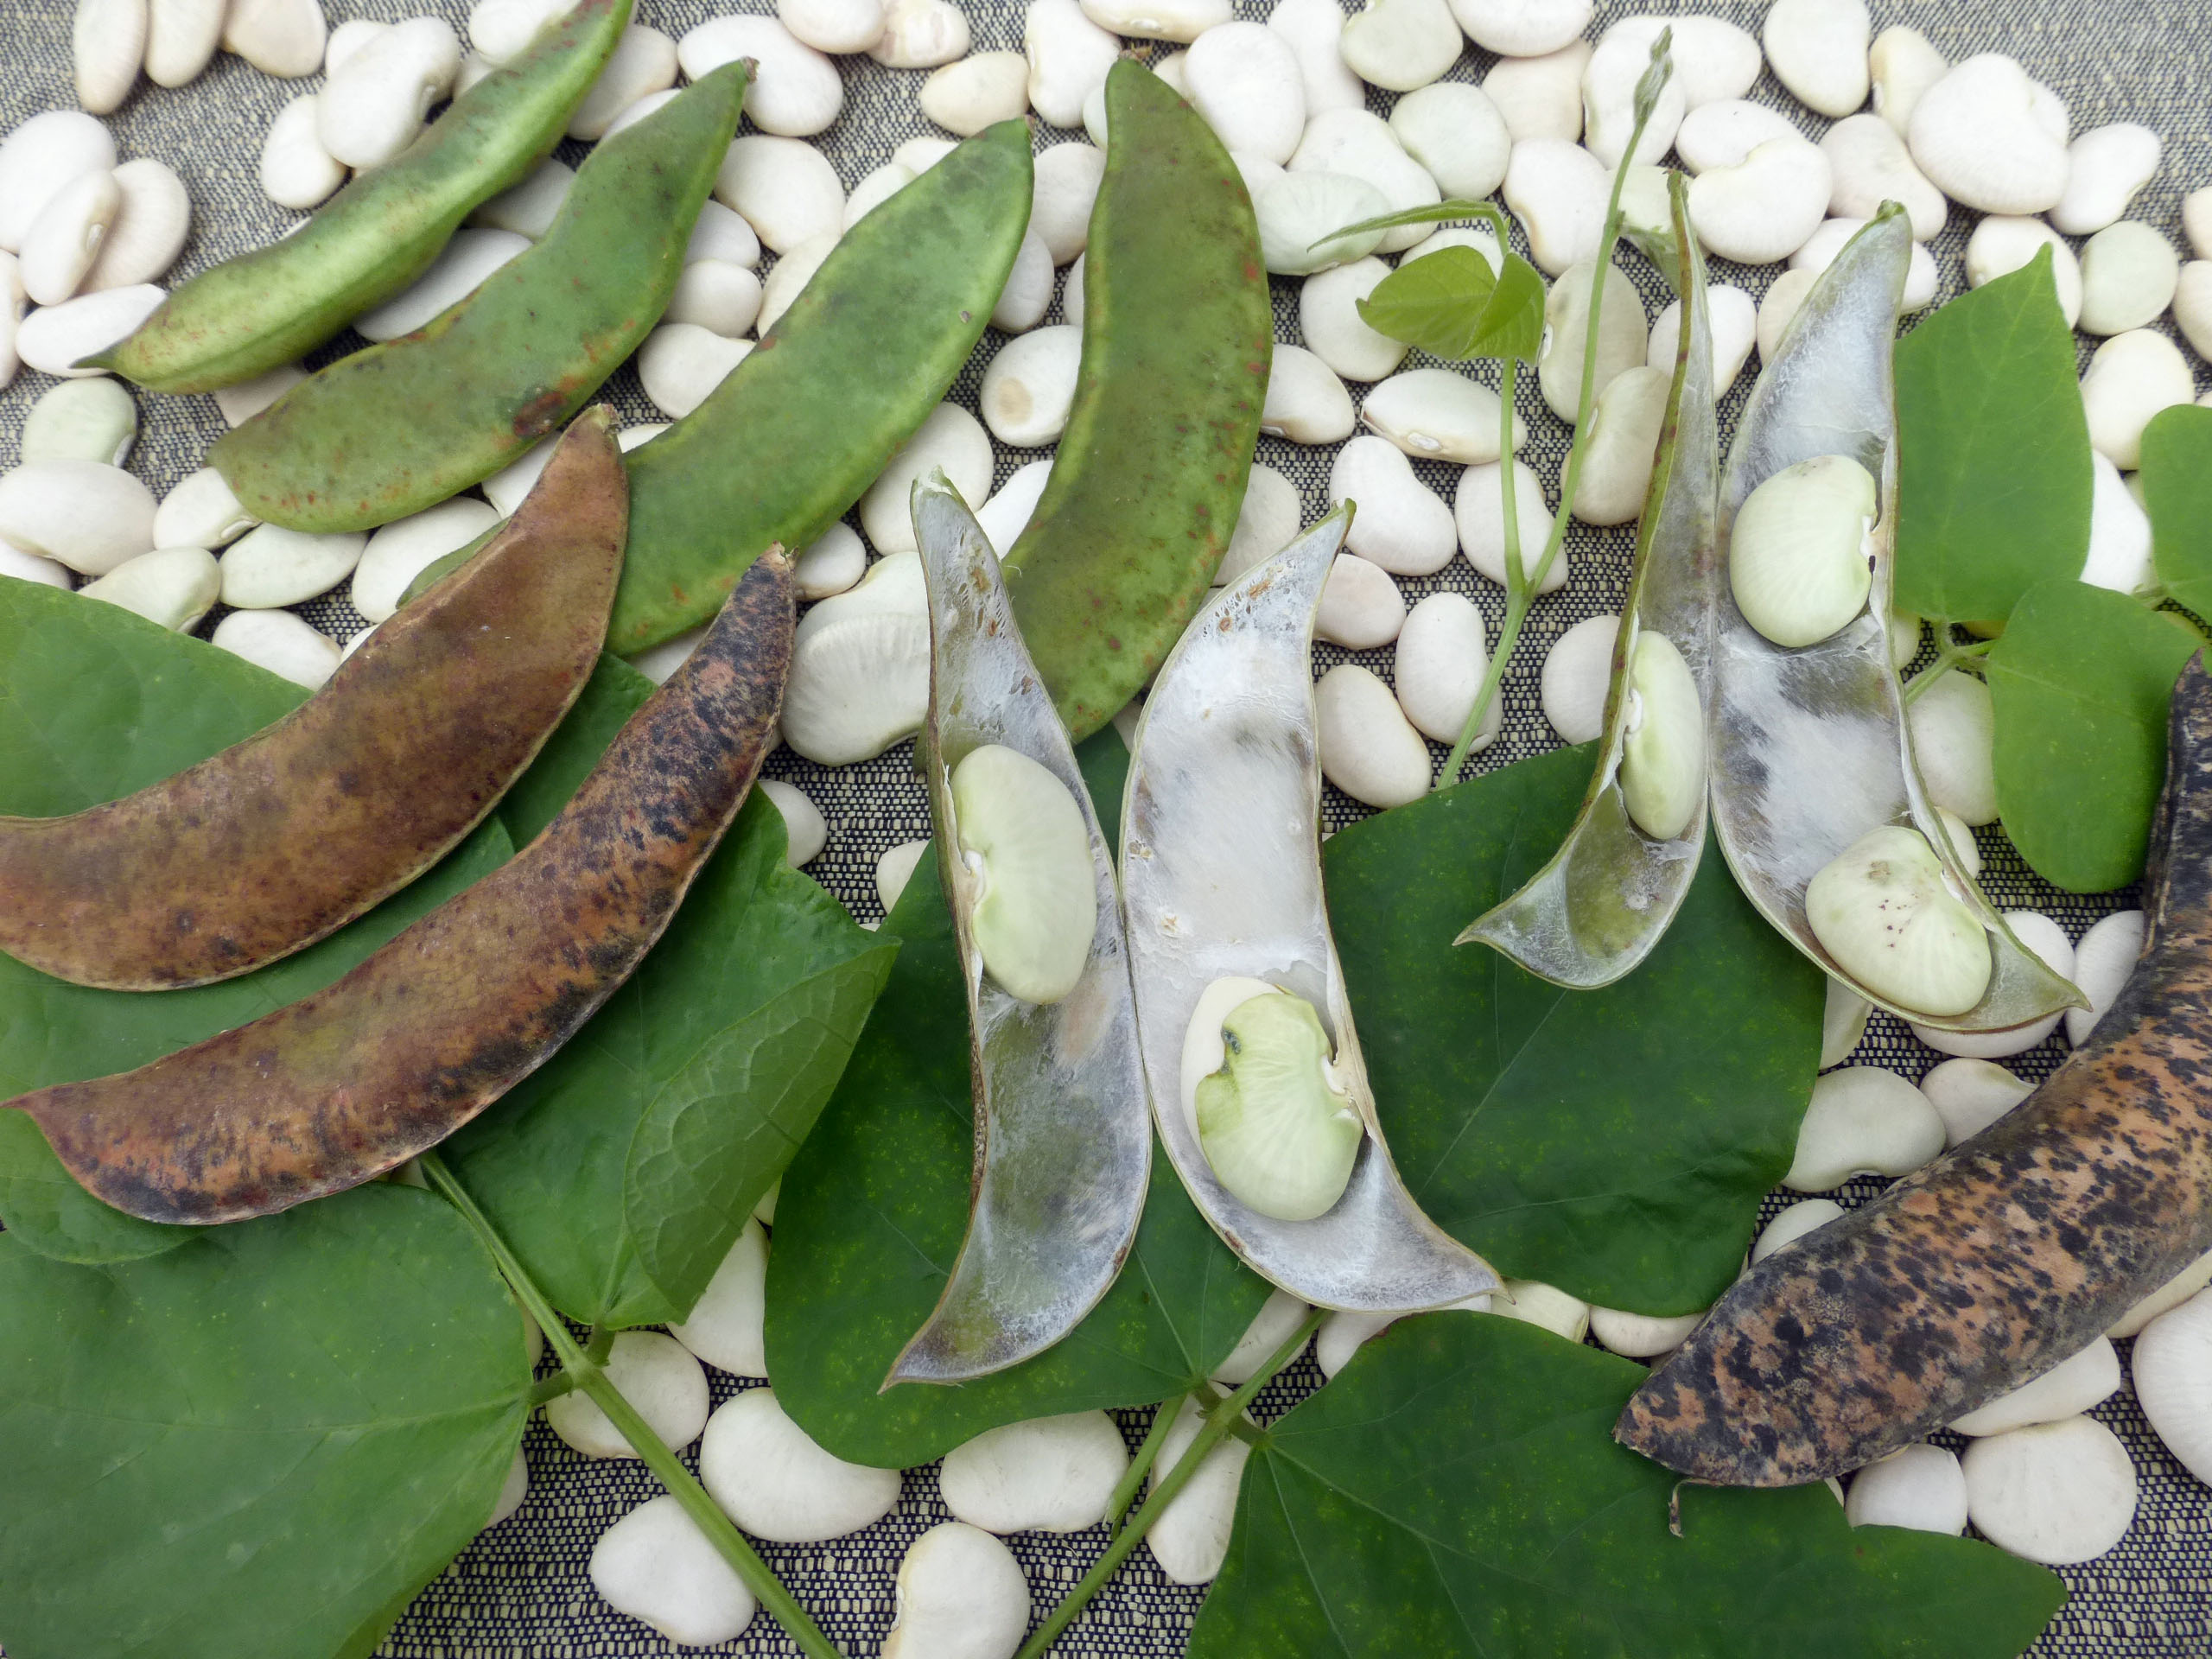 Heirloom Organic King Of The Garden Pole Bean Lima Bean Seeds.